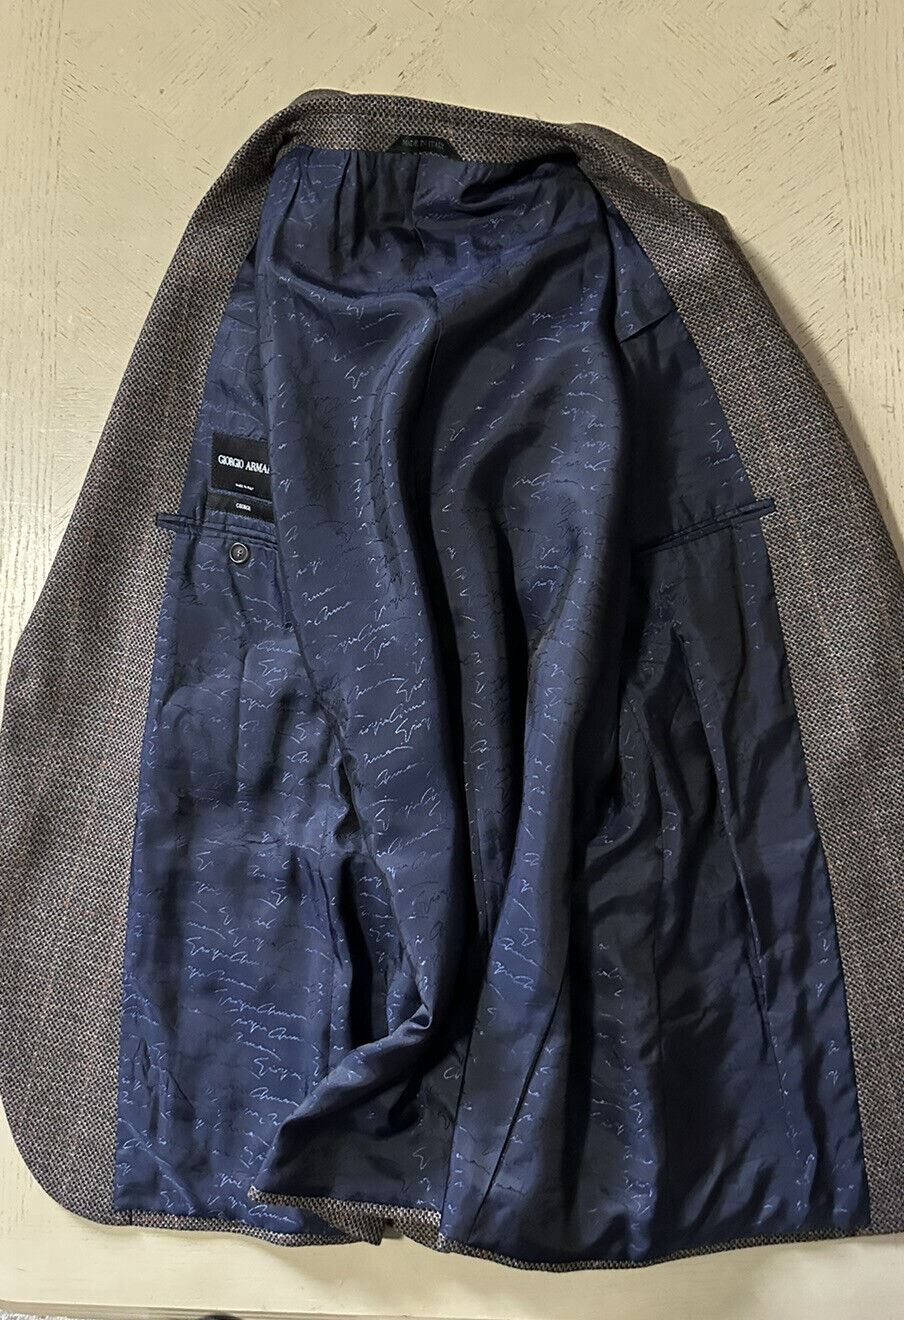 NWT $2695 Giorgio Armani Men Plaid Sport Coat Jacket Blazer Brown/Mu. 42 US/52 E